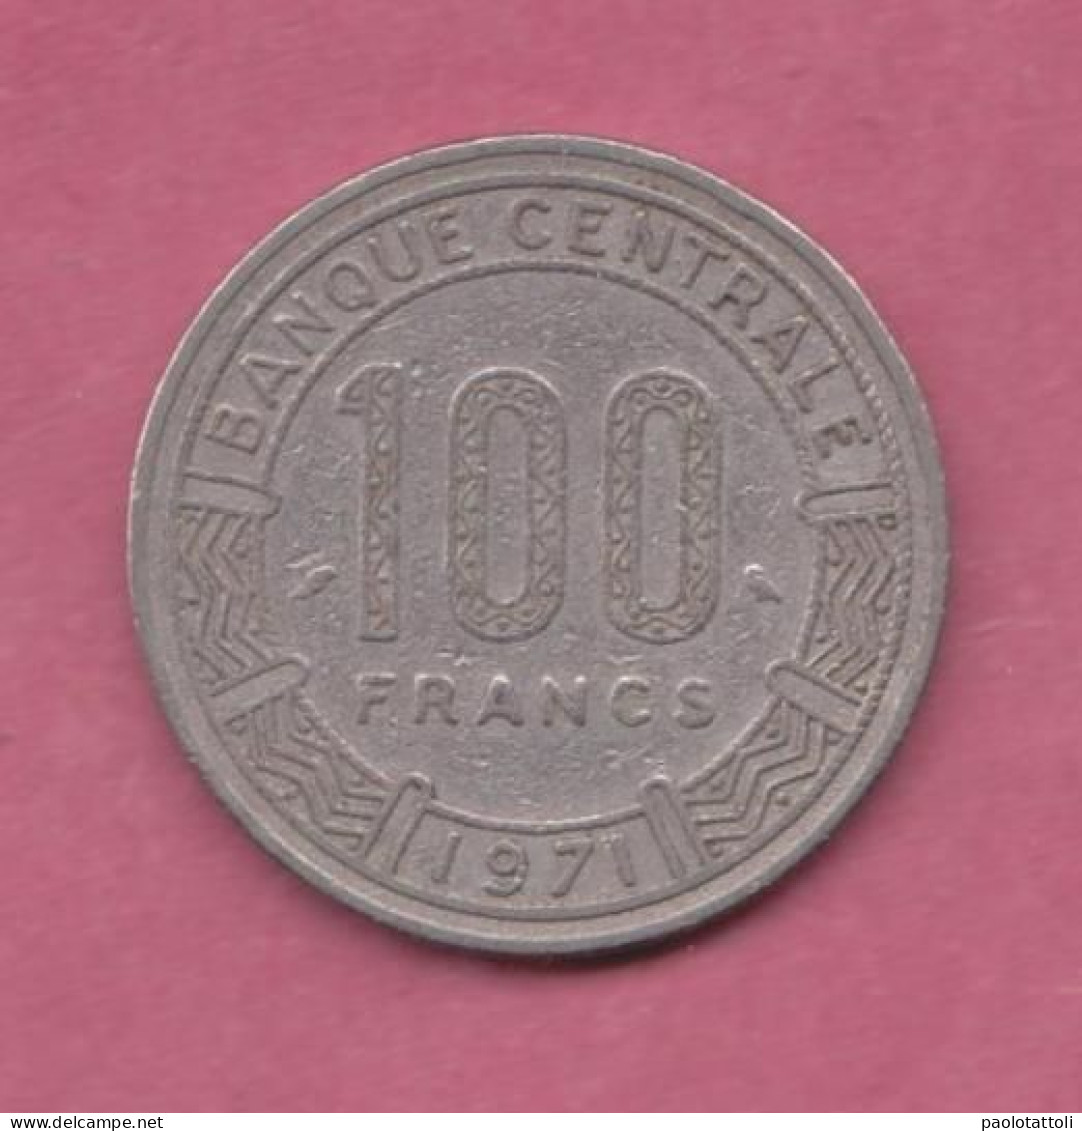 Republique Populaire Du Congo, 1971- 100 Francs- Nickel- Obverse Three Giant Eland. Reverse Denomination - Congo (Democratische Republiek 1998)